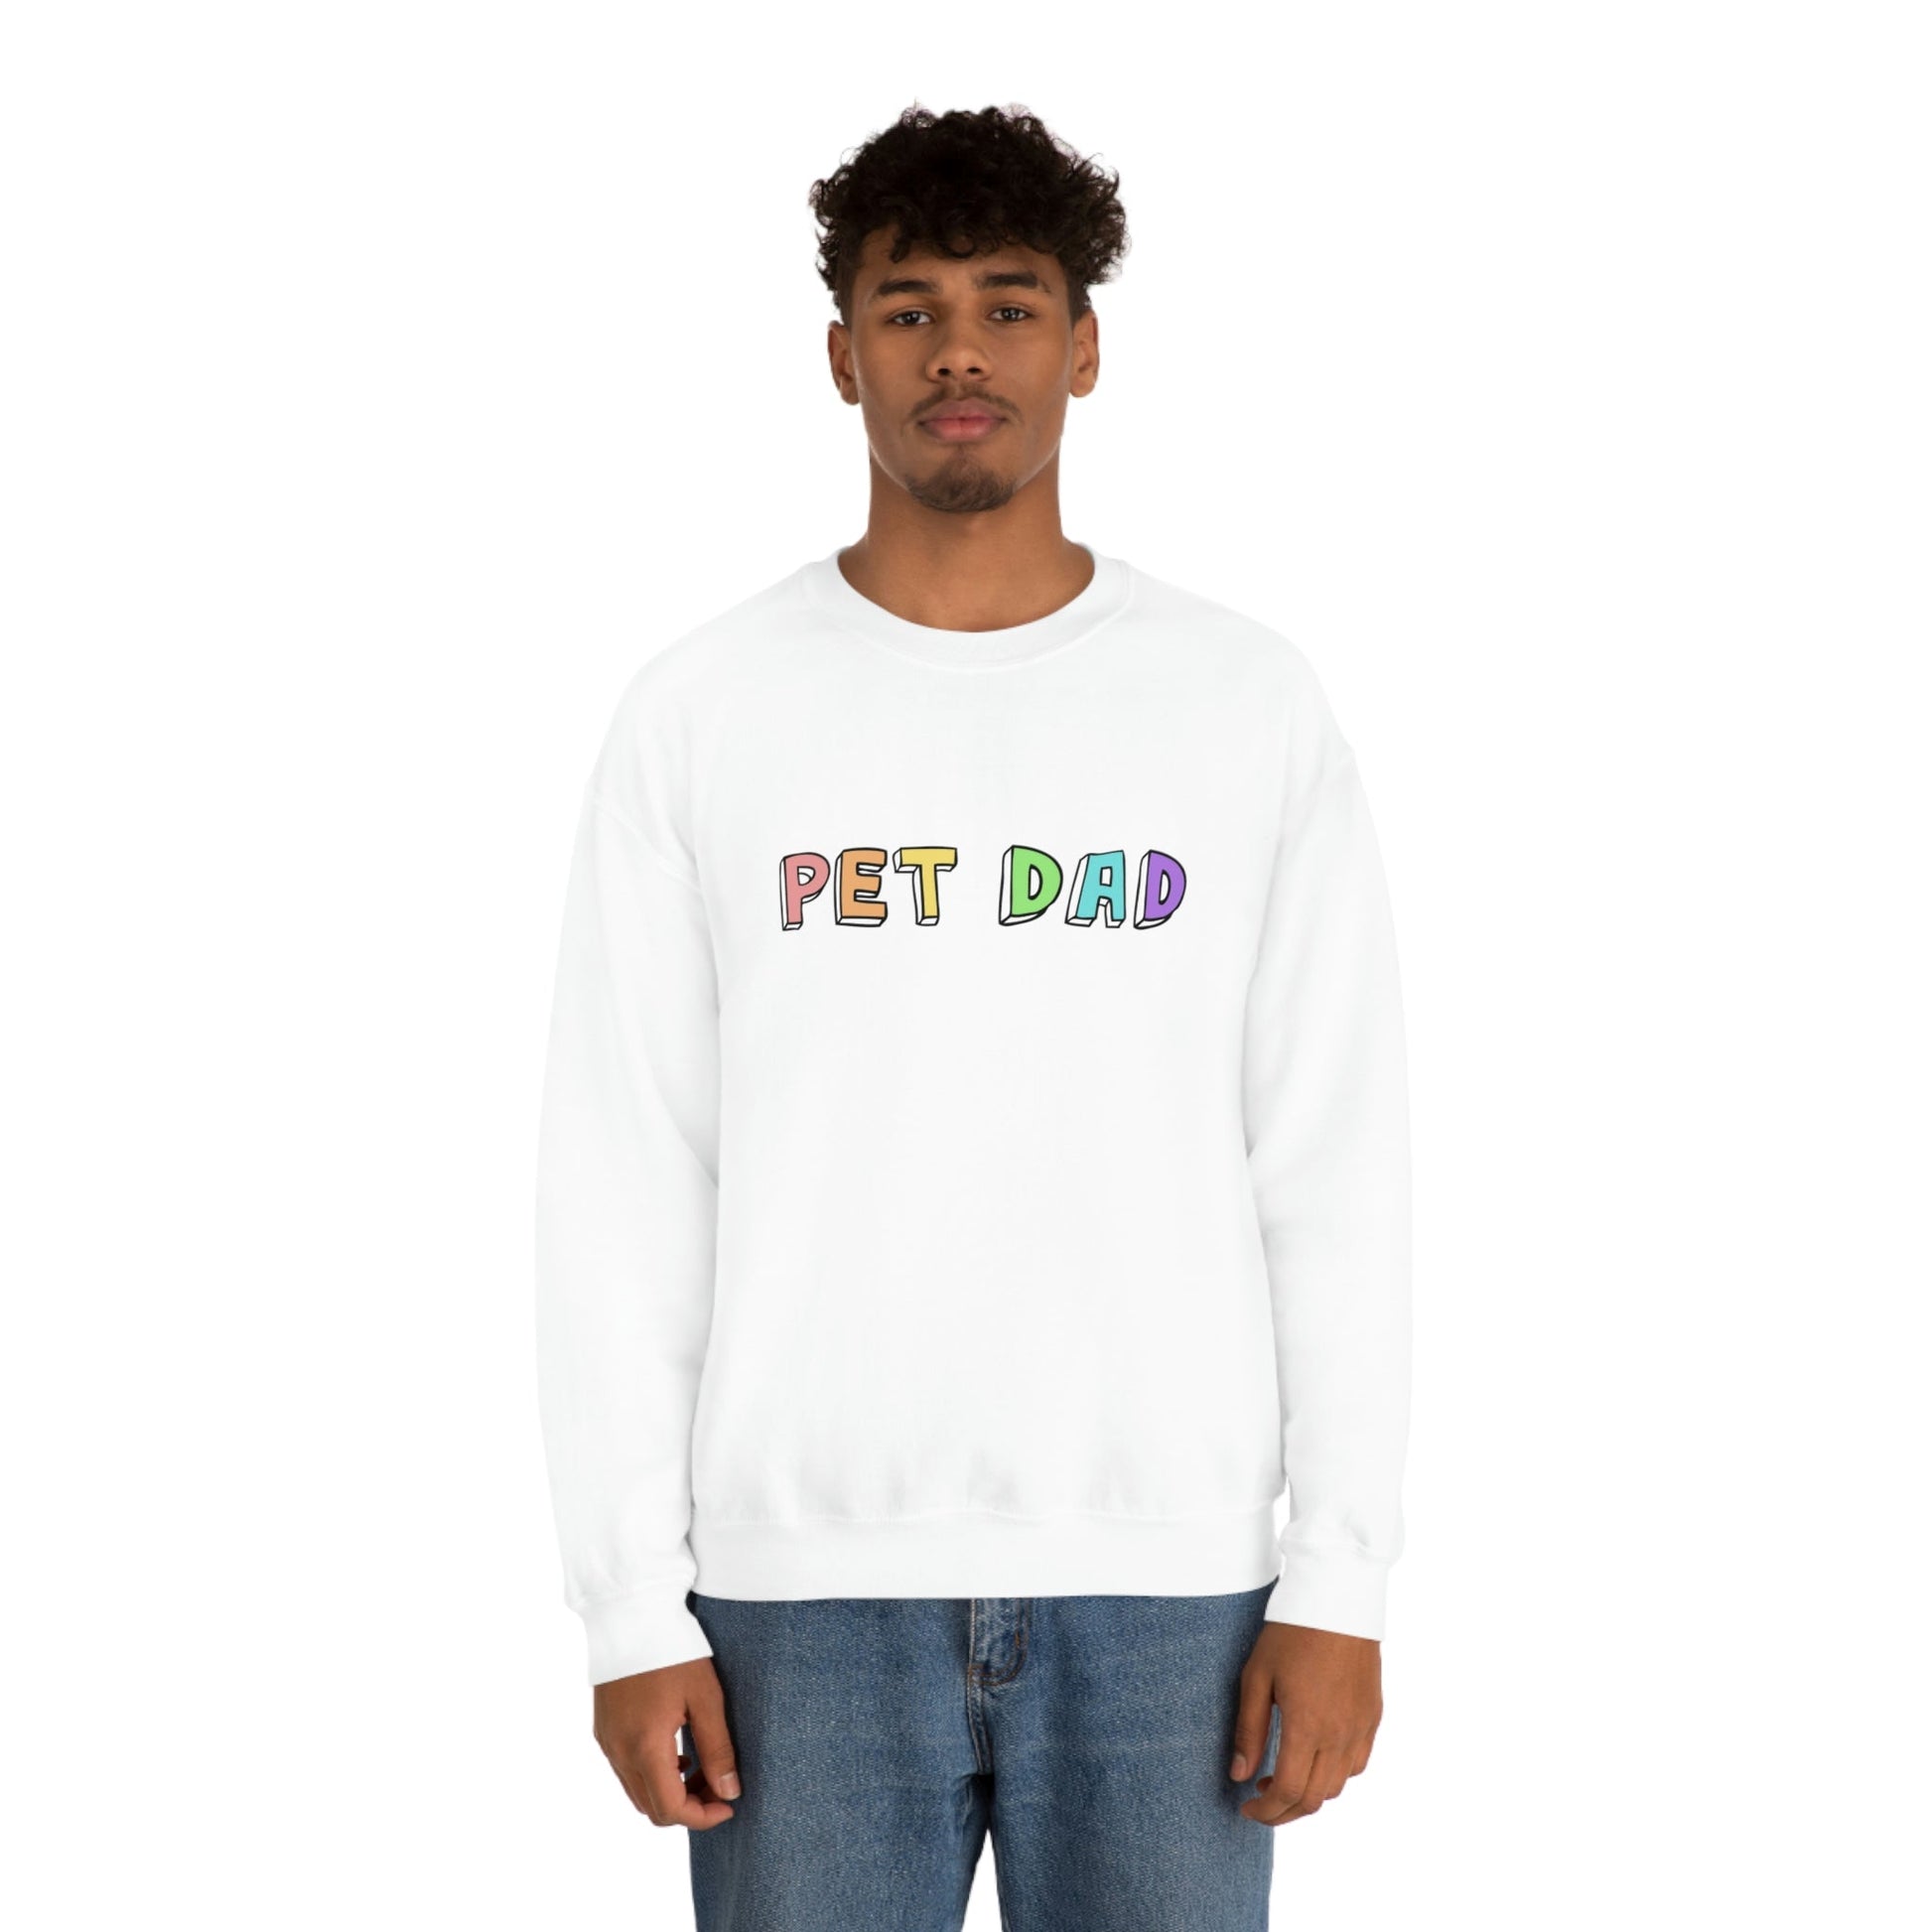 Pet Dad | Crewneck Sweatshirt - Detezi Designs-16832965437392564658